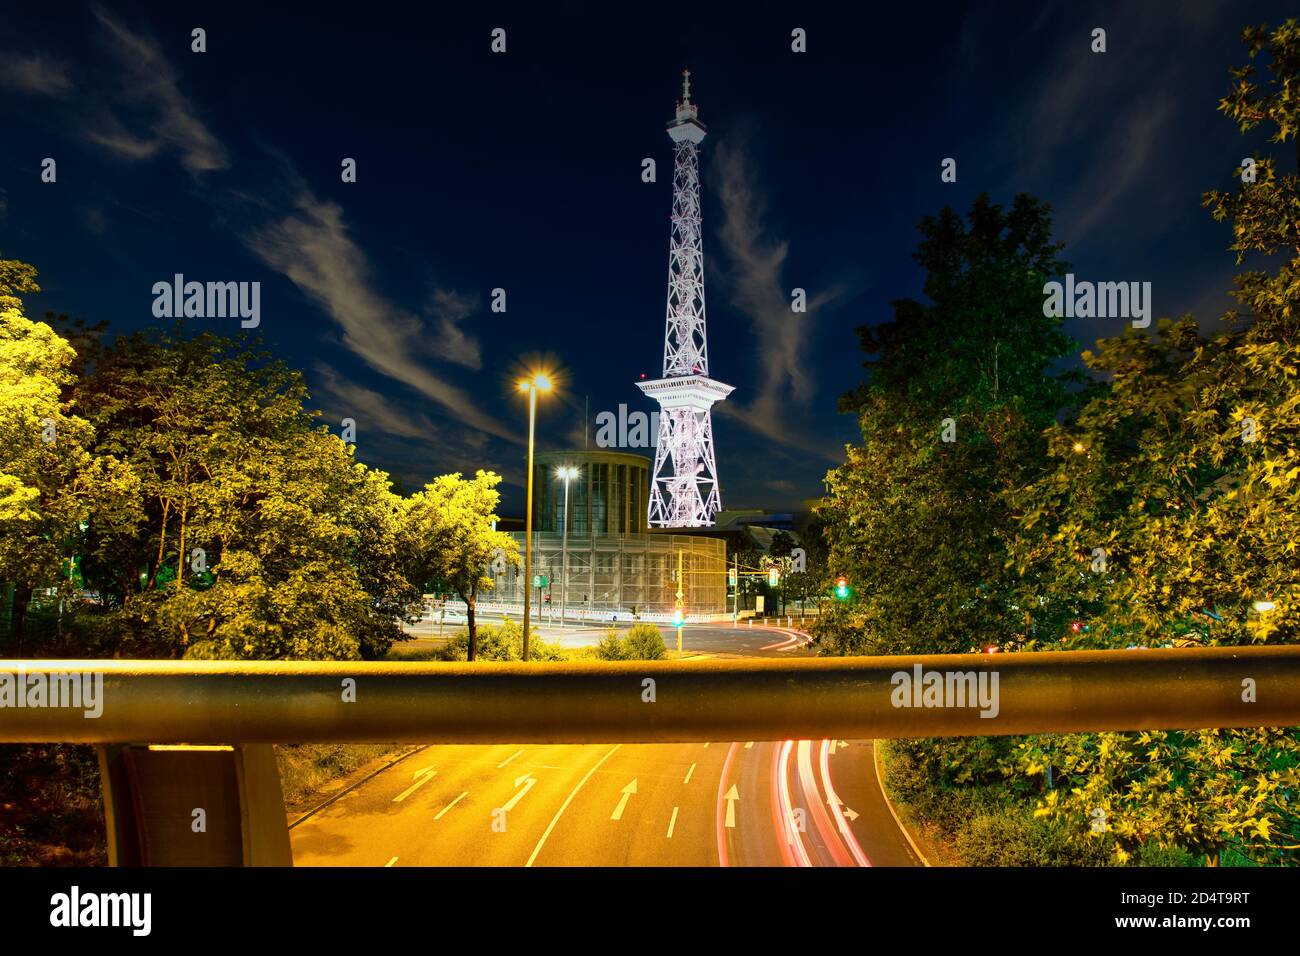 The Berlin radio tower at night in Berlin, Germany Stock Photo